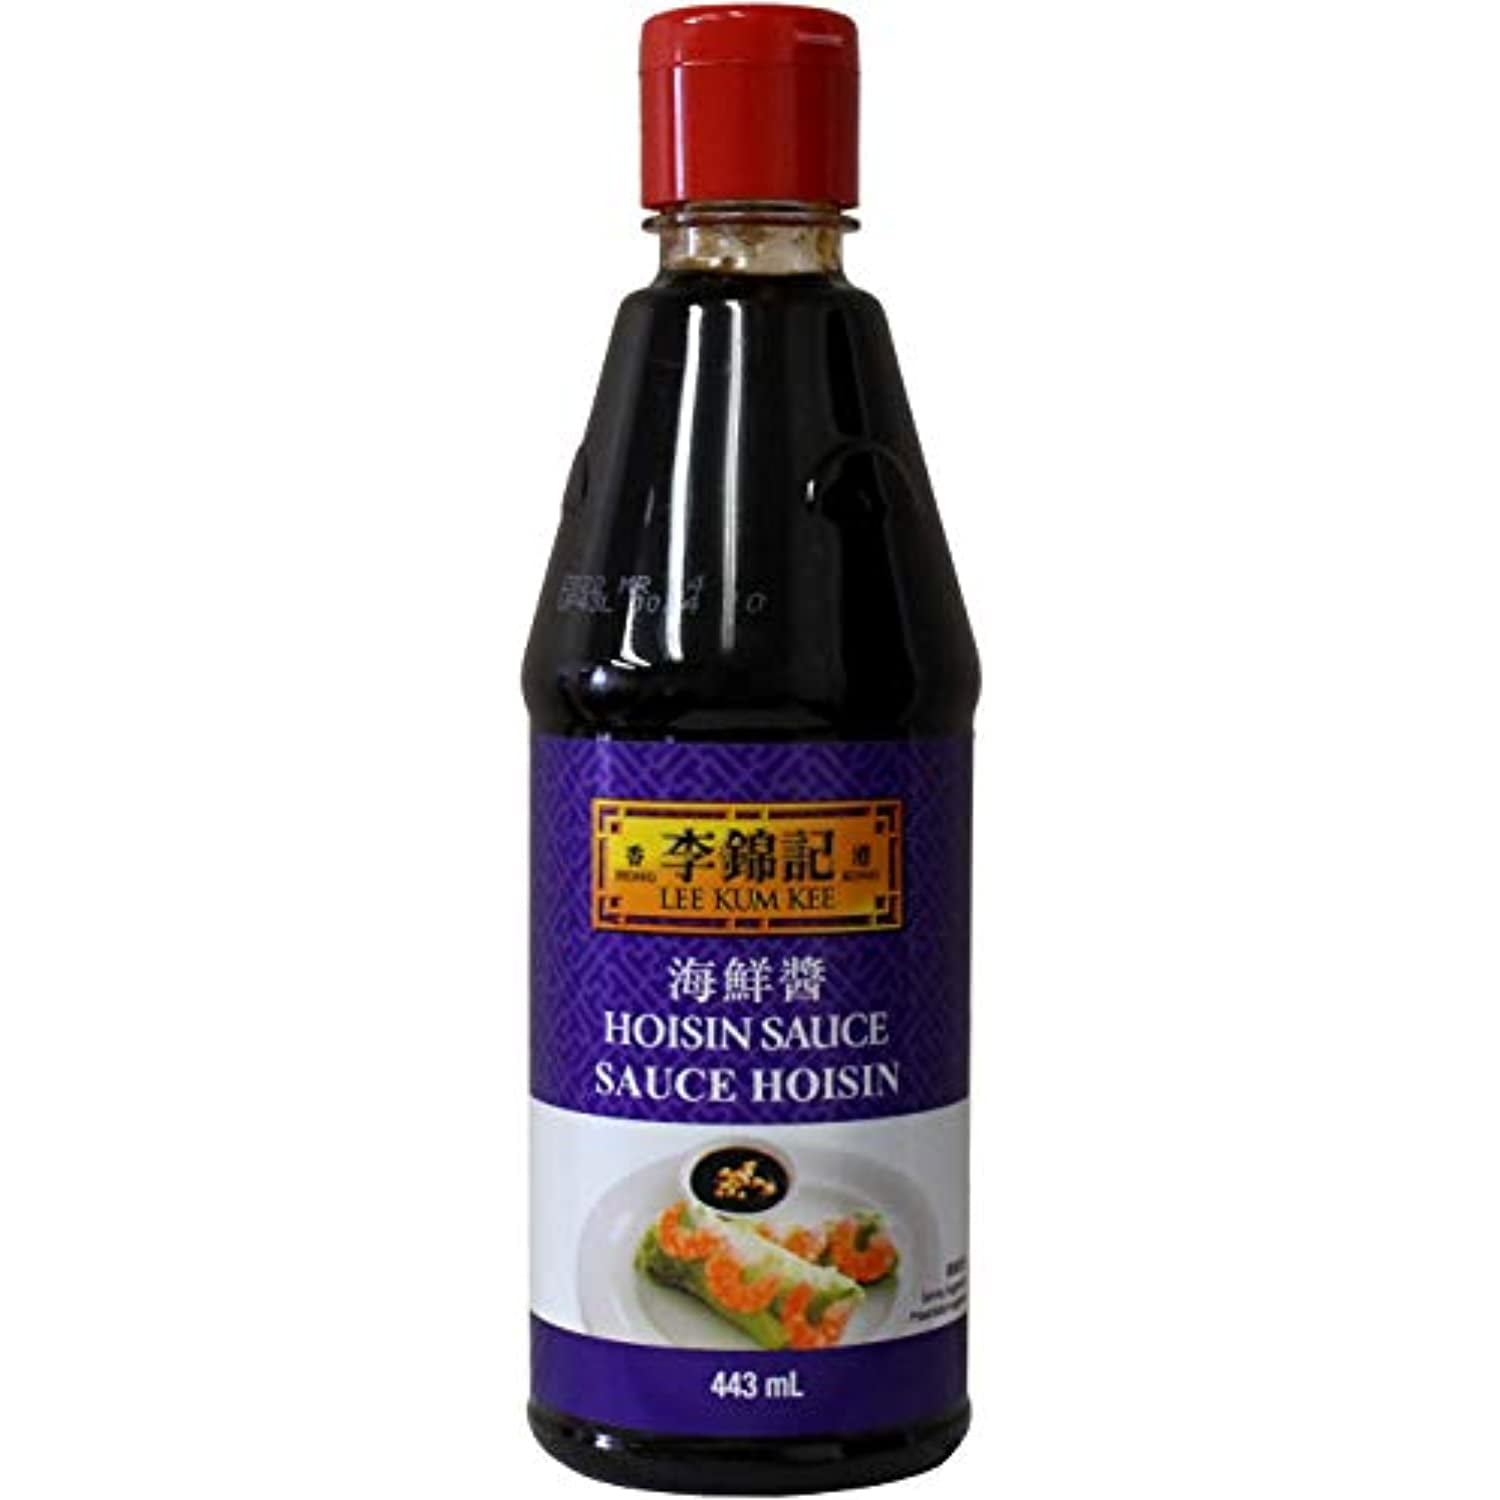 Lee Kum Kee Hoisin Sauce, Bottle, 20 Oz - Walmart.com